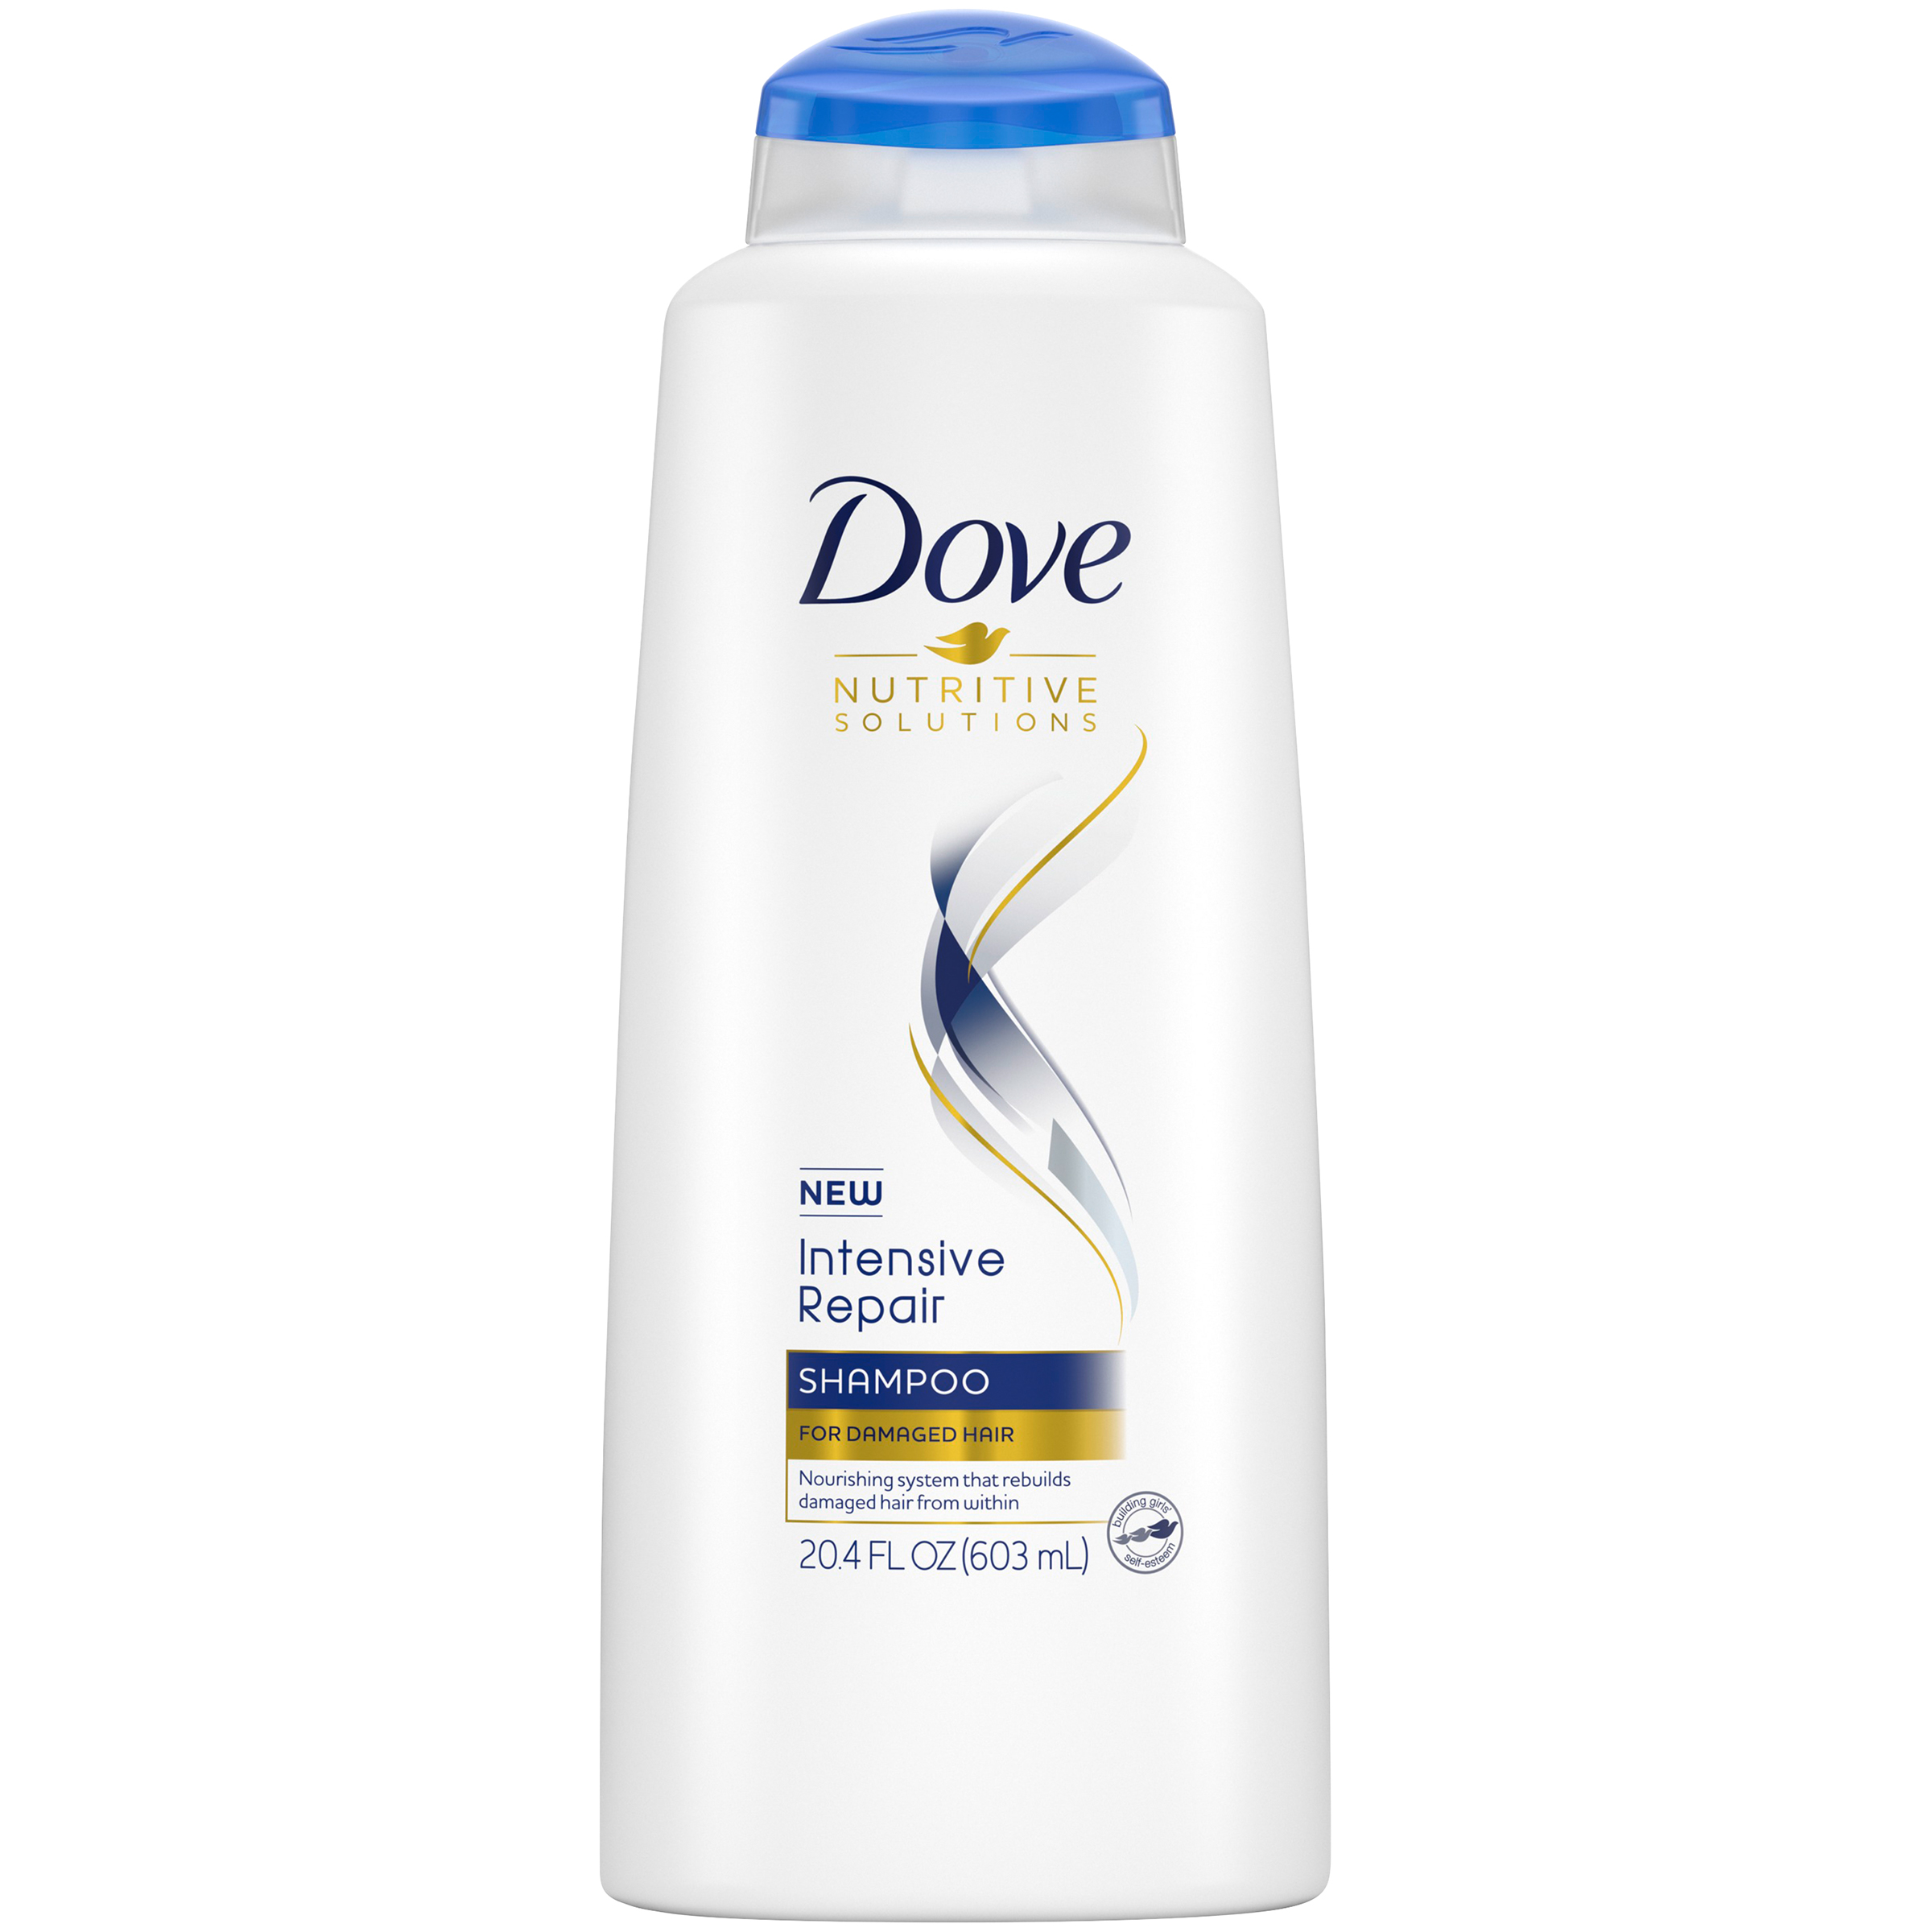 Dove Nutritive Solutions Intensive Repair Shampoo 25.4 fl oz. Squeeze Bottle